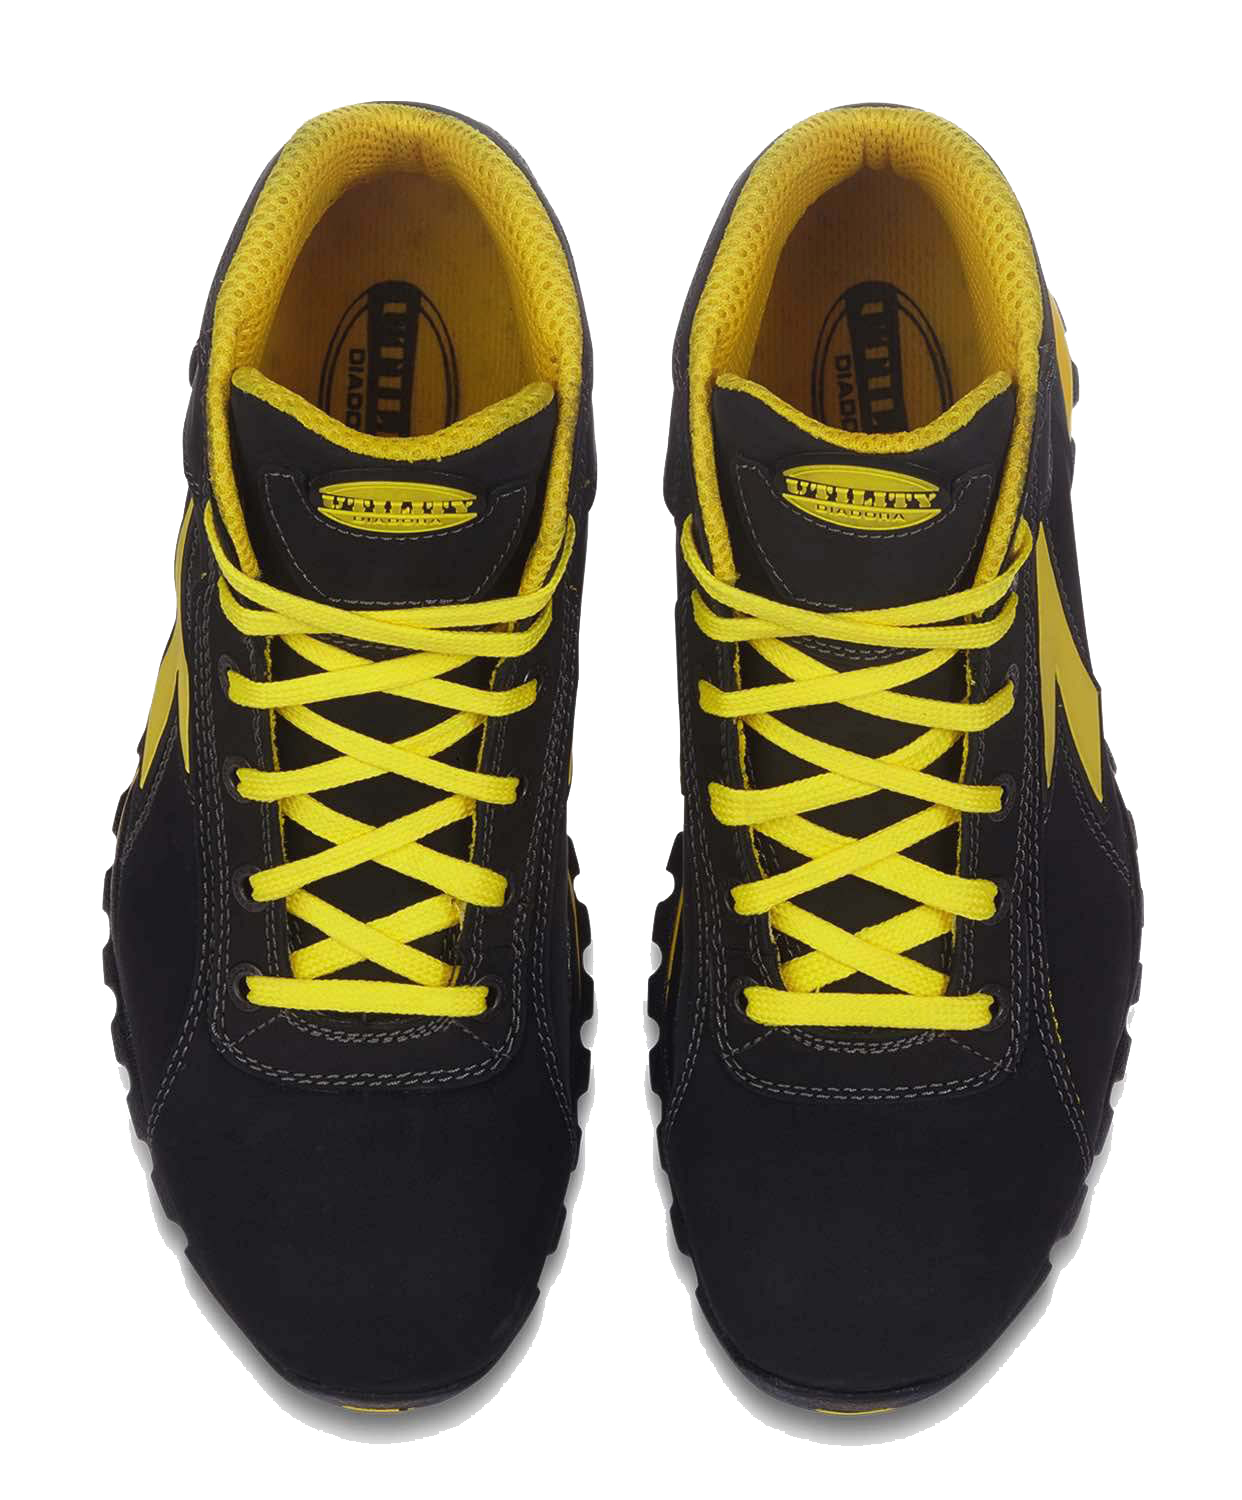 Chaussures de sécurité hautes GLOVE II HIGH S3 SRA HRO noir/jaune P35 - DIADORA SPA - 701.170234